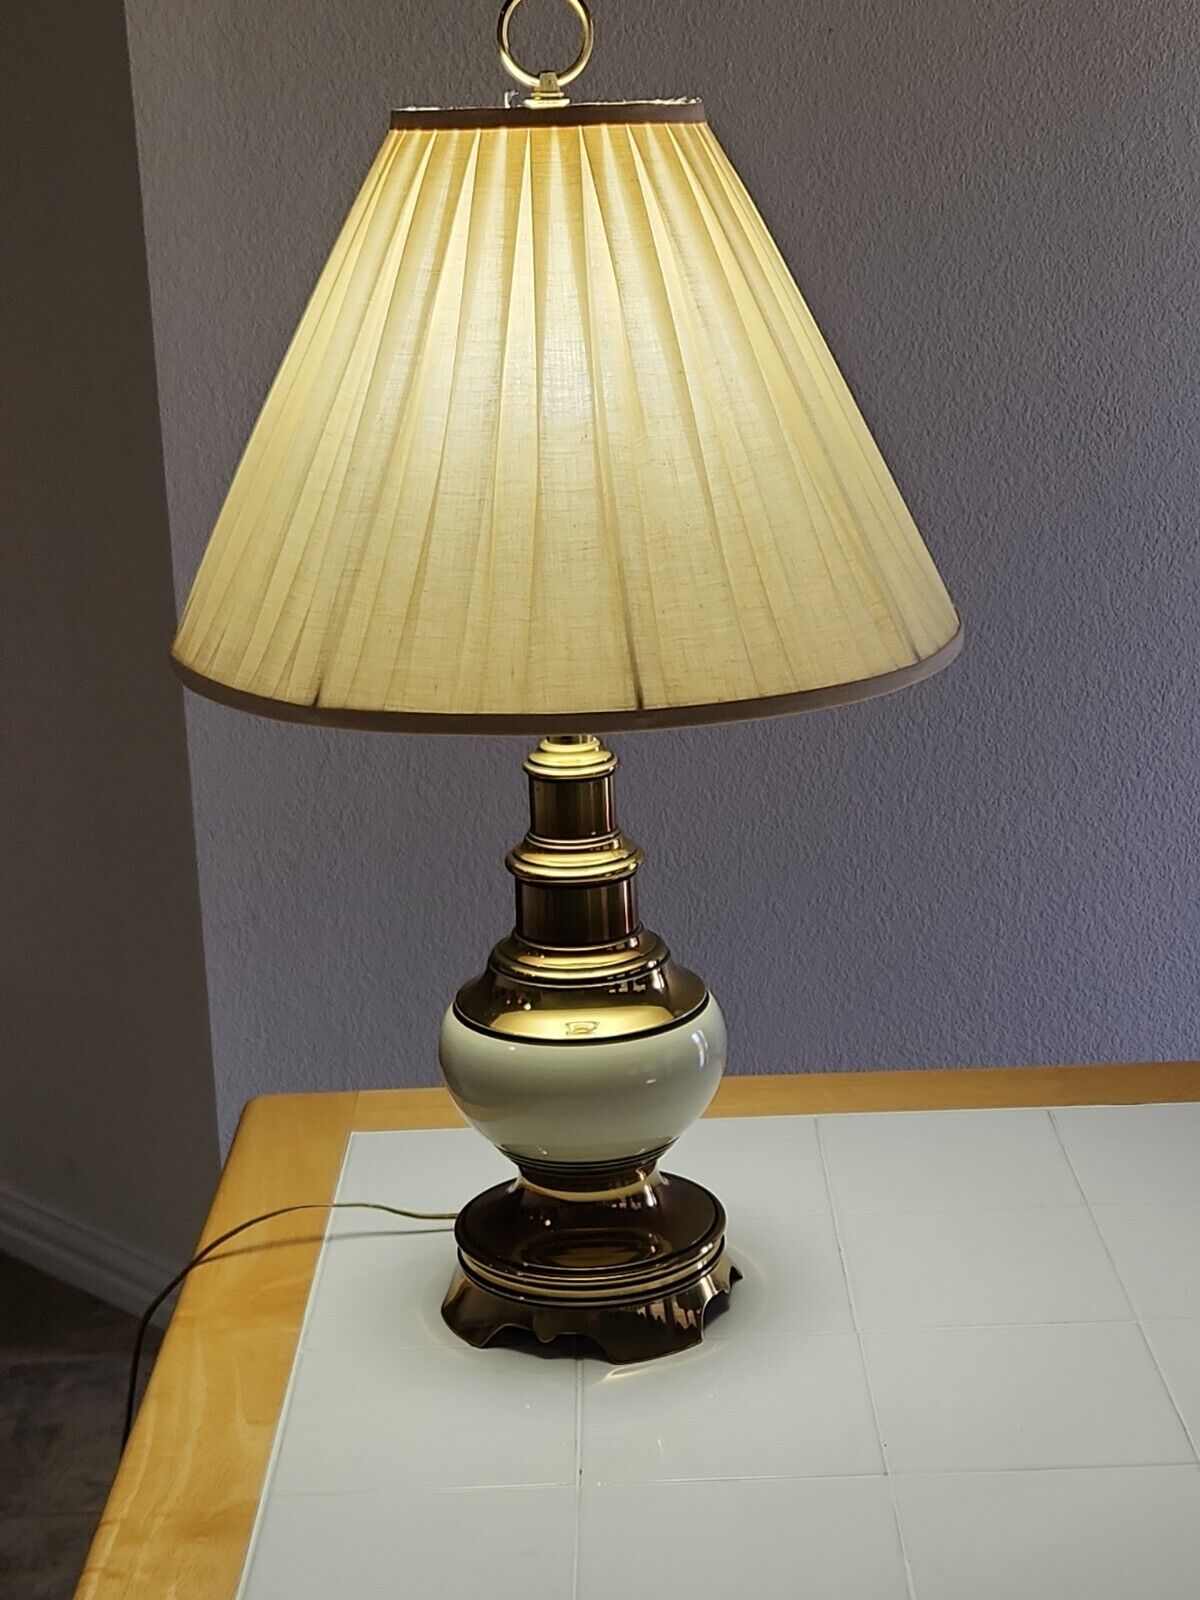 Alsy Maud Mid Century Modern Lighting Vintage Lamp Knockouts  BEST LAMP